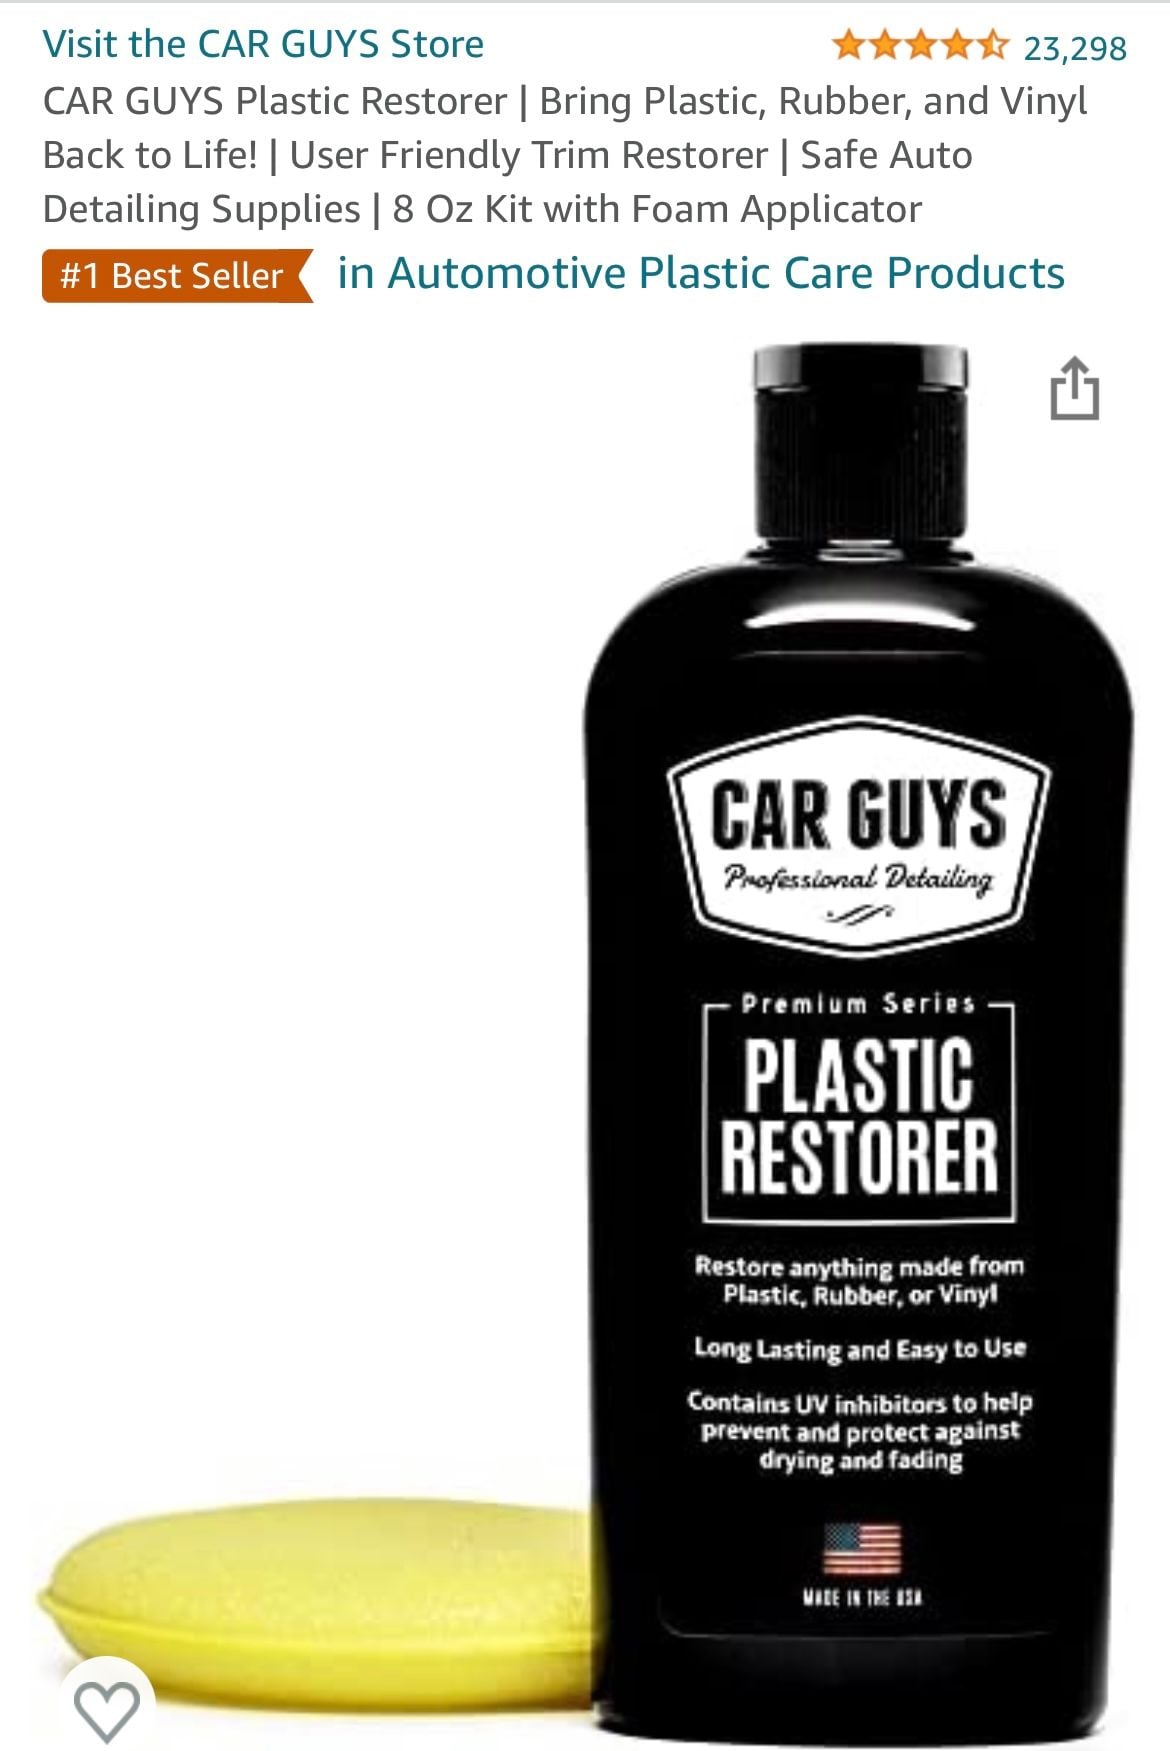 CAR GUYS Plastic Restorer, Bring Plastic, Rubber, and Vinyl Back to Life!, User Friendly Trim Restorer, Safe Auto Detailing Supplies